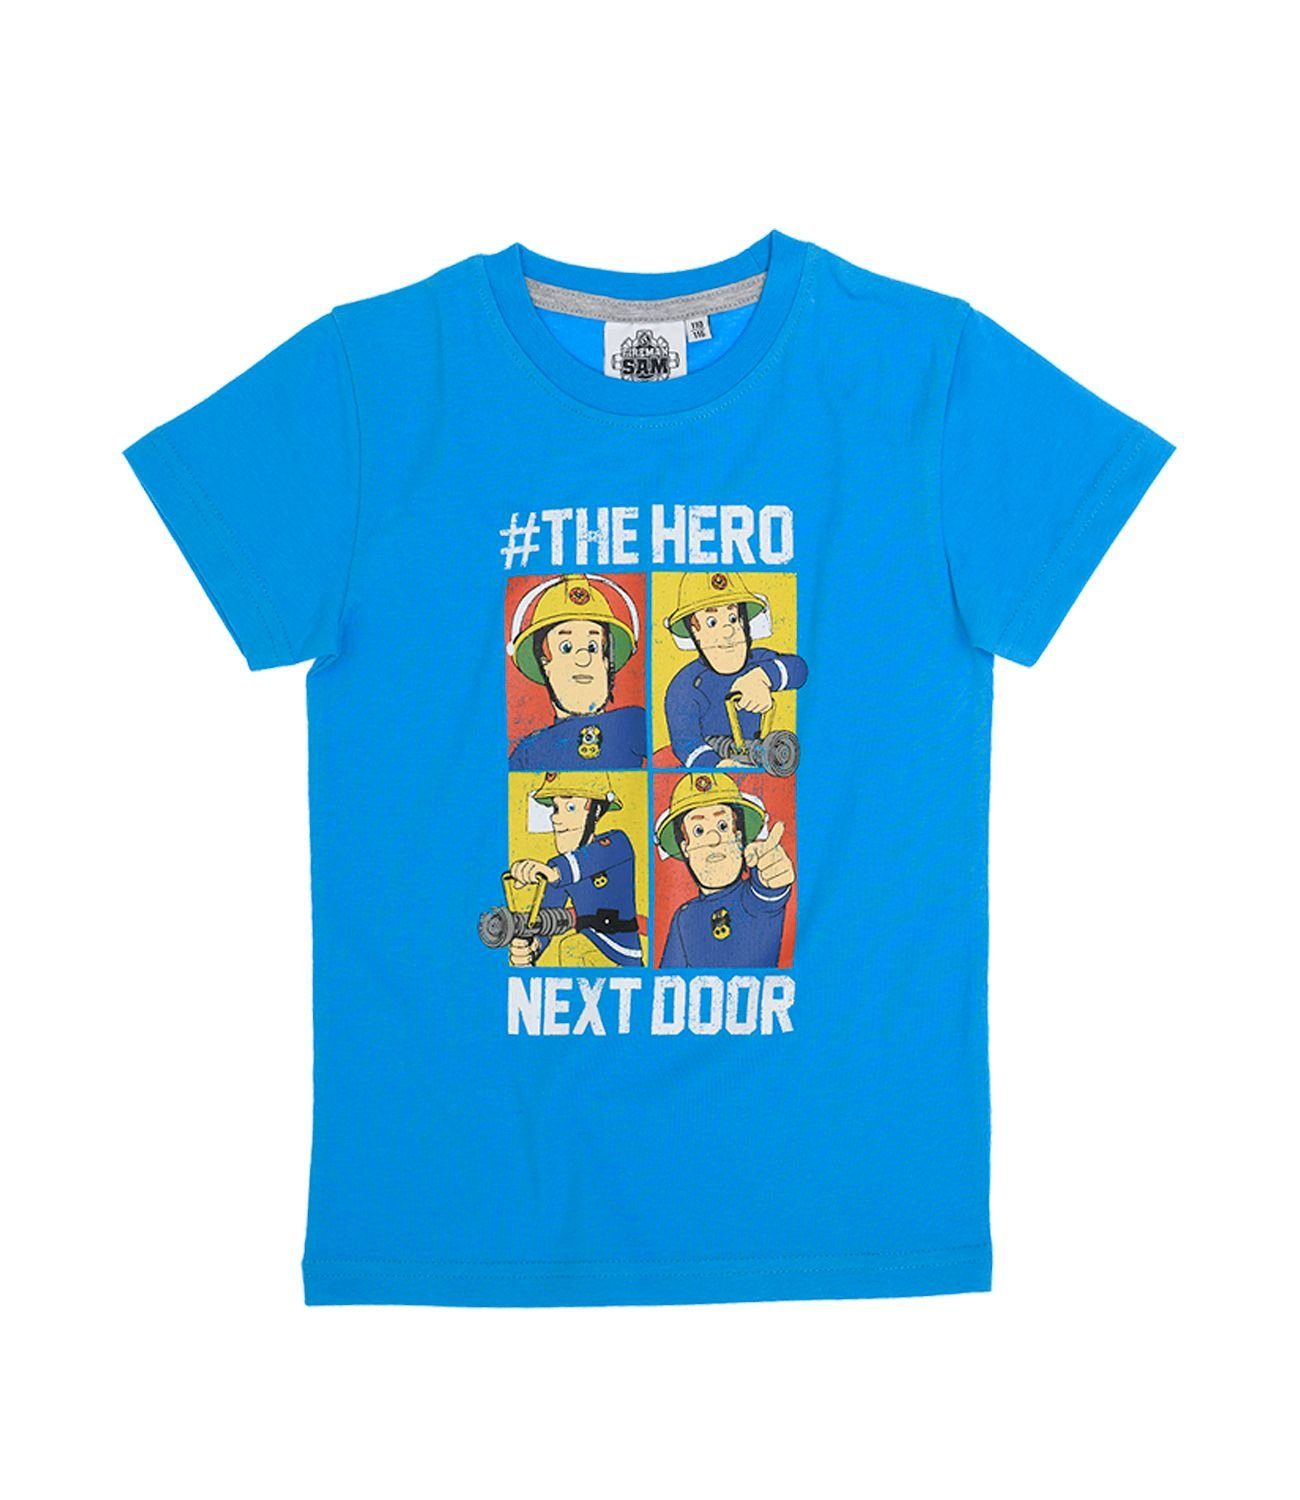 Kinder Kids (Gr. 92 -146) Feuerwehrmann Sam T-Shirt 2x FEUERWEHRMANN SAM Kinder T-Shirts Doppelpack gelb+blau Jungen + Mädchen G